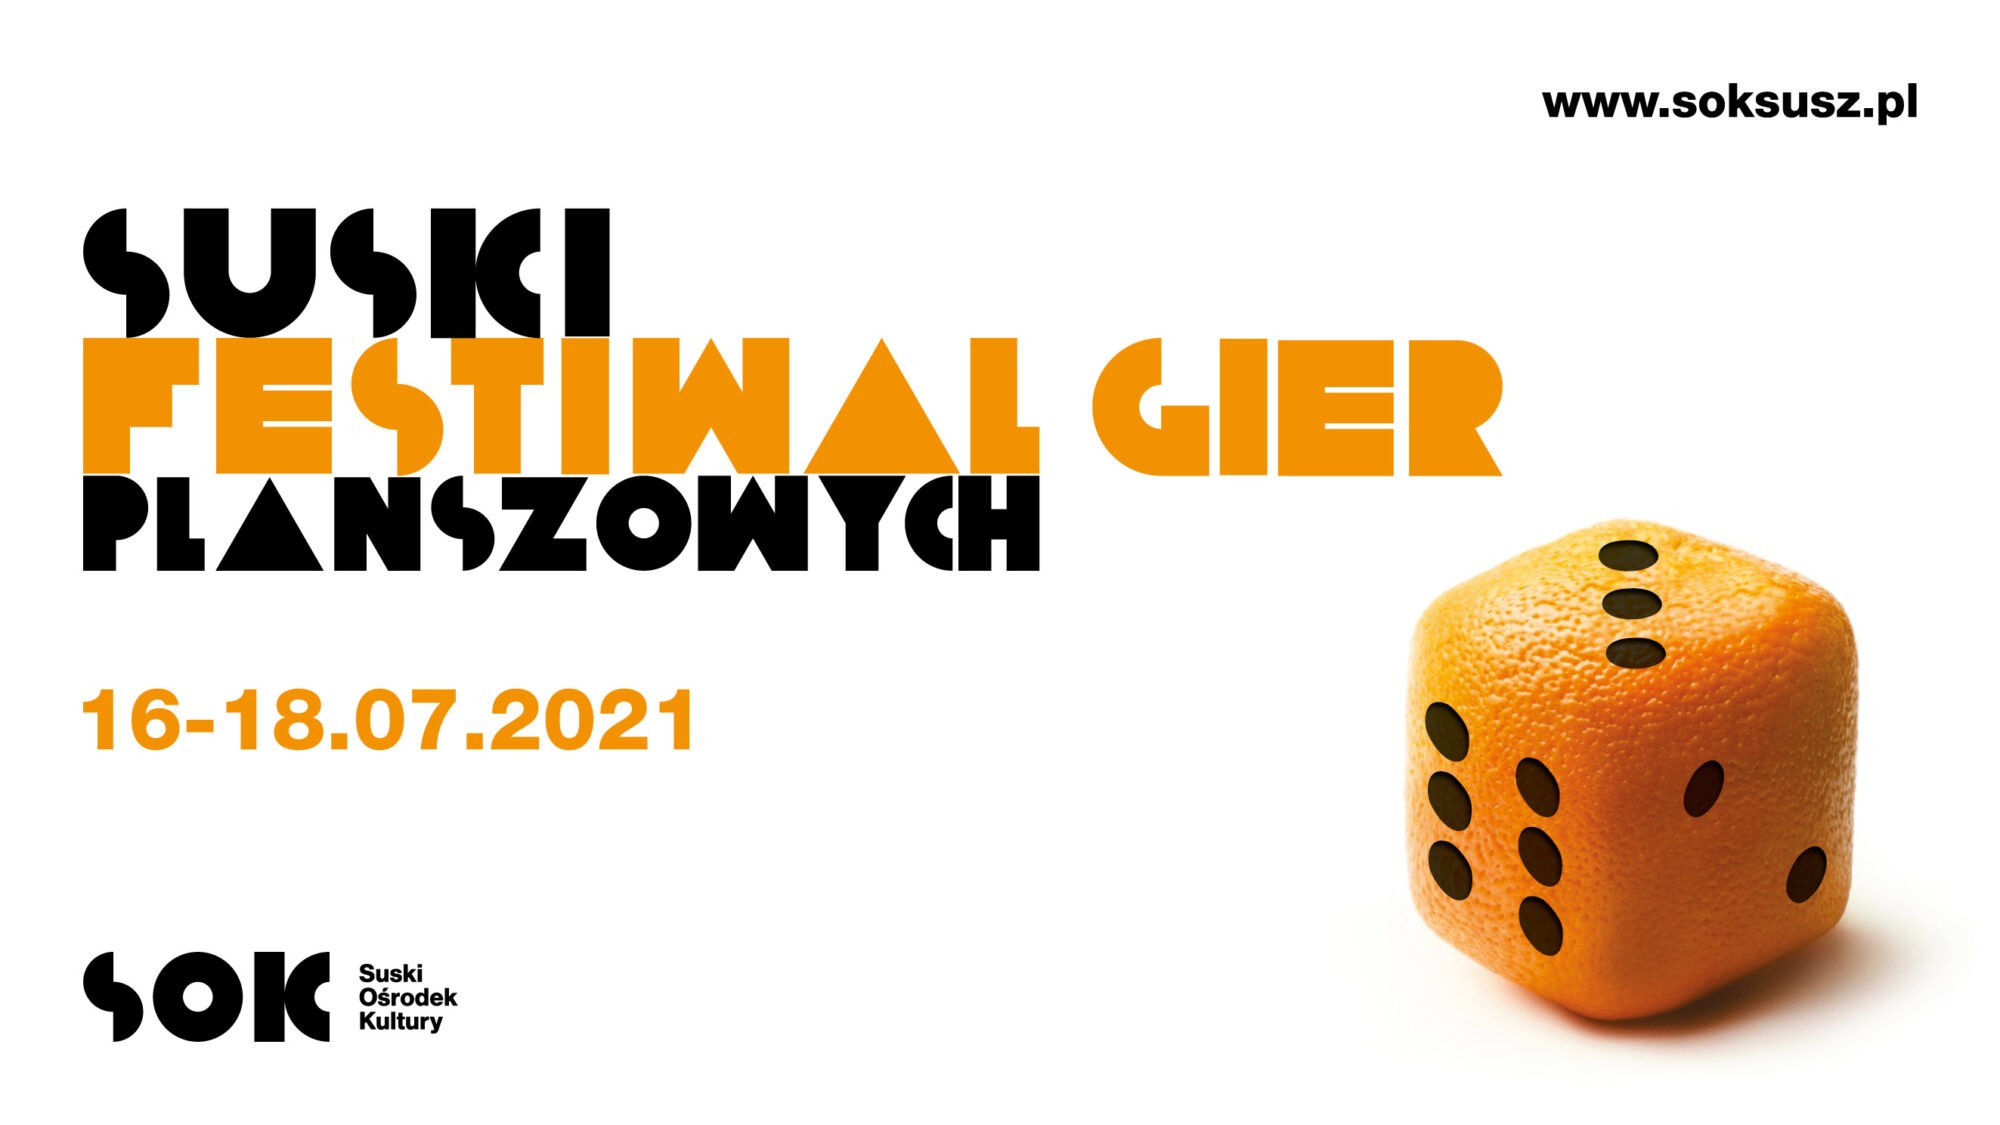 Suski Festiwal Gier Planszowych 16-18.07